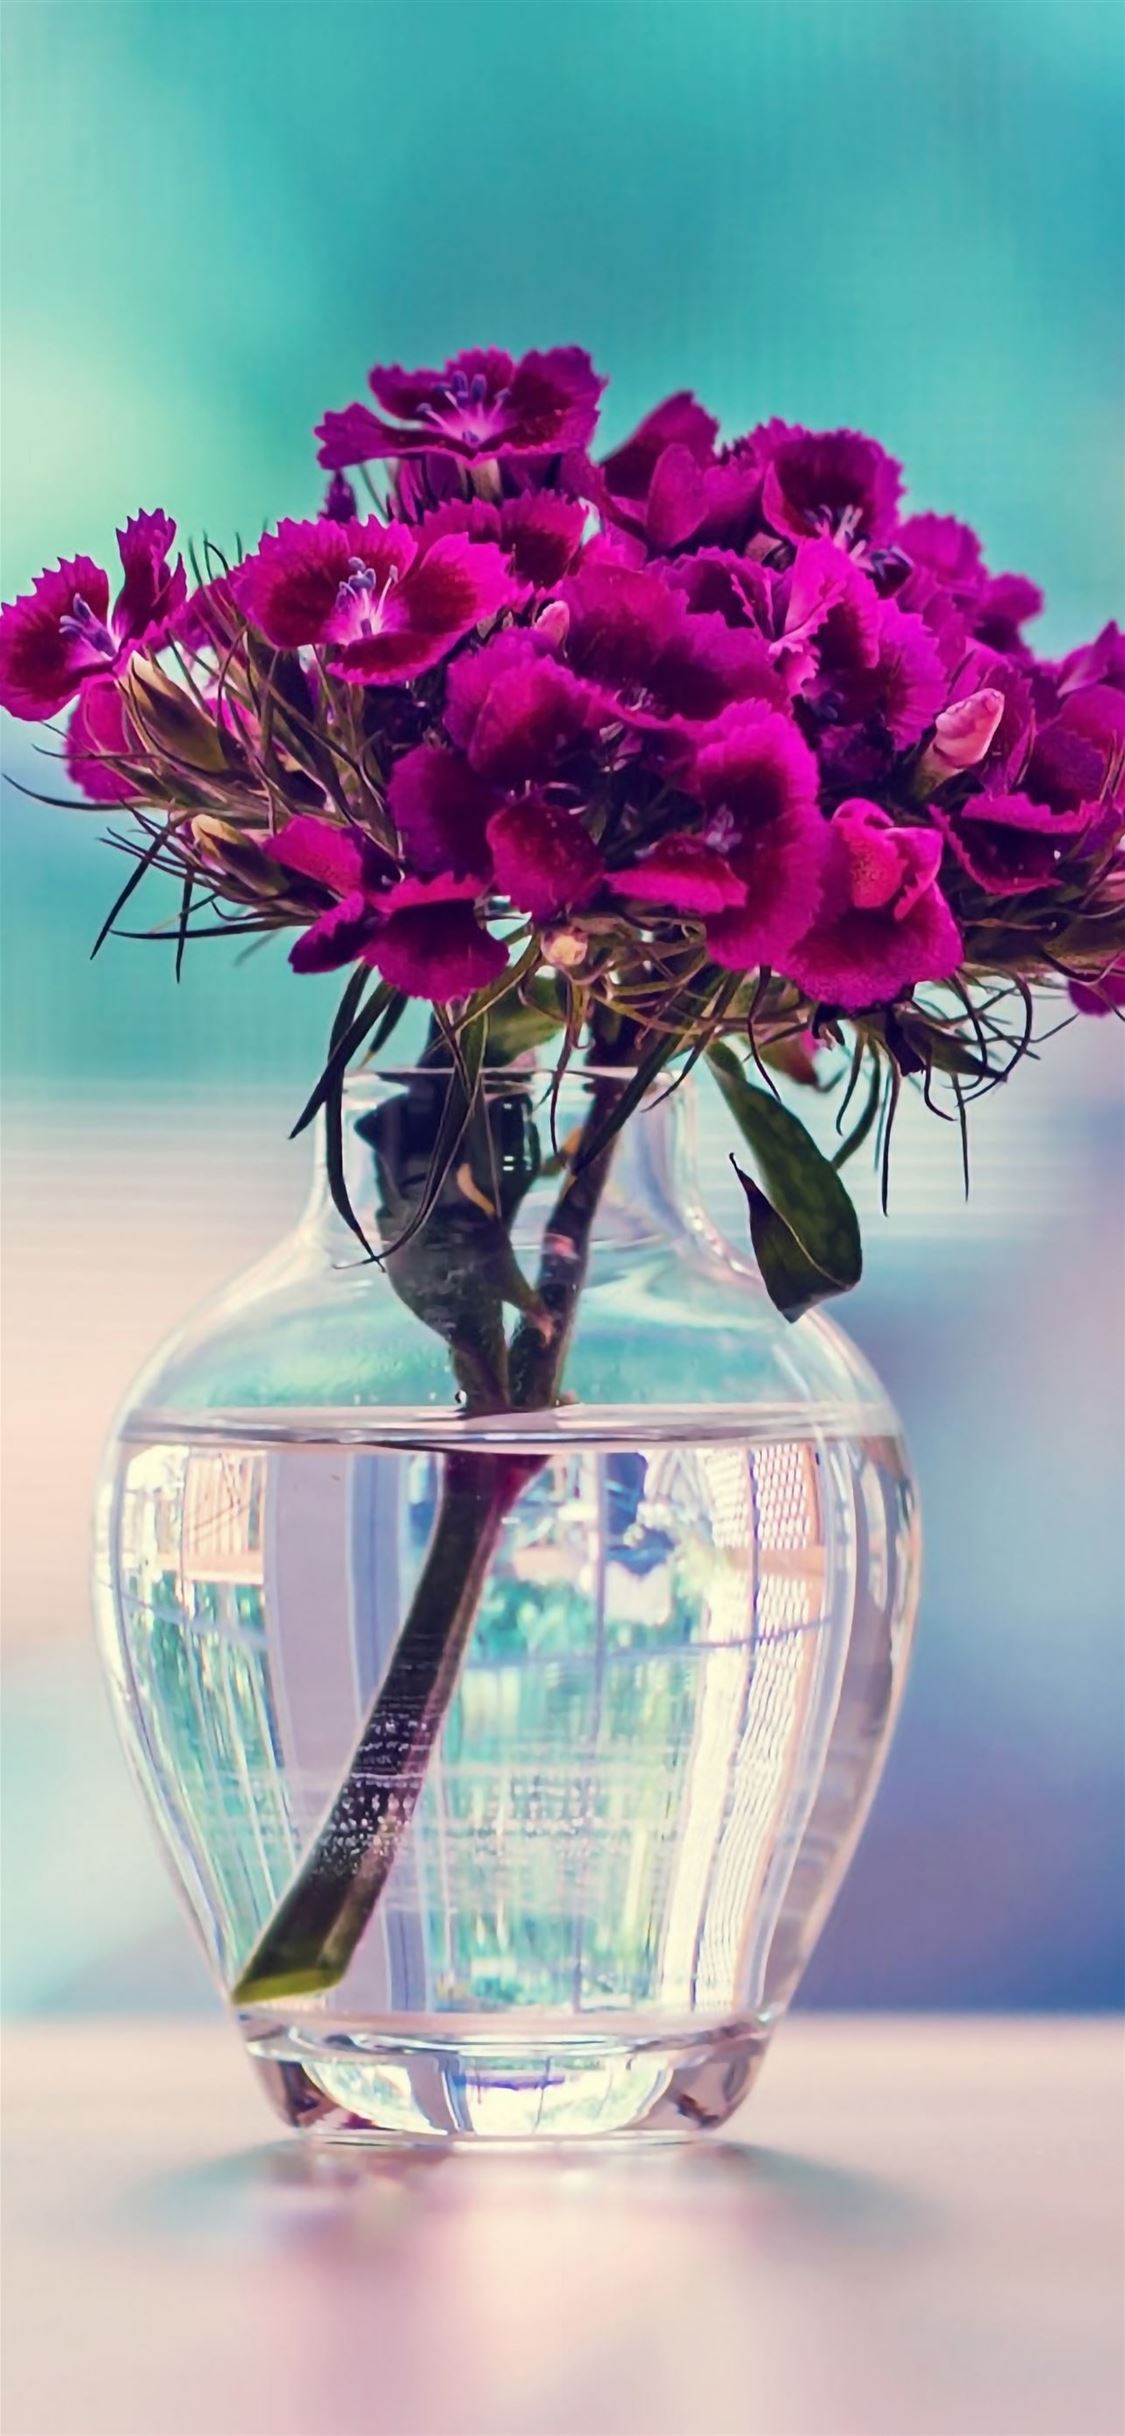 Purple Carnation In A Vase Flower iPhone wallpaper 